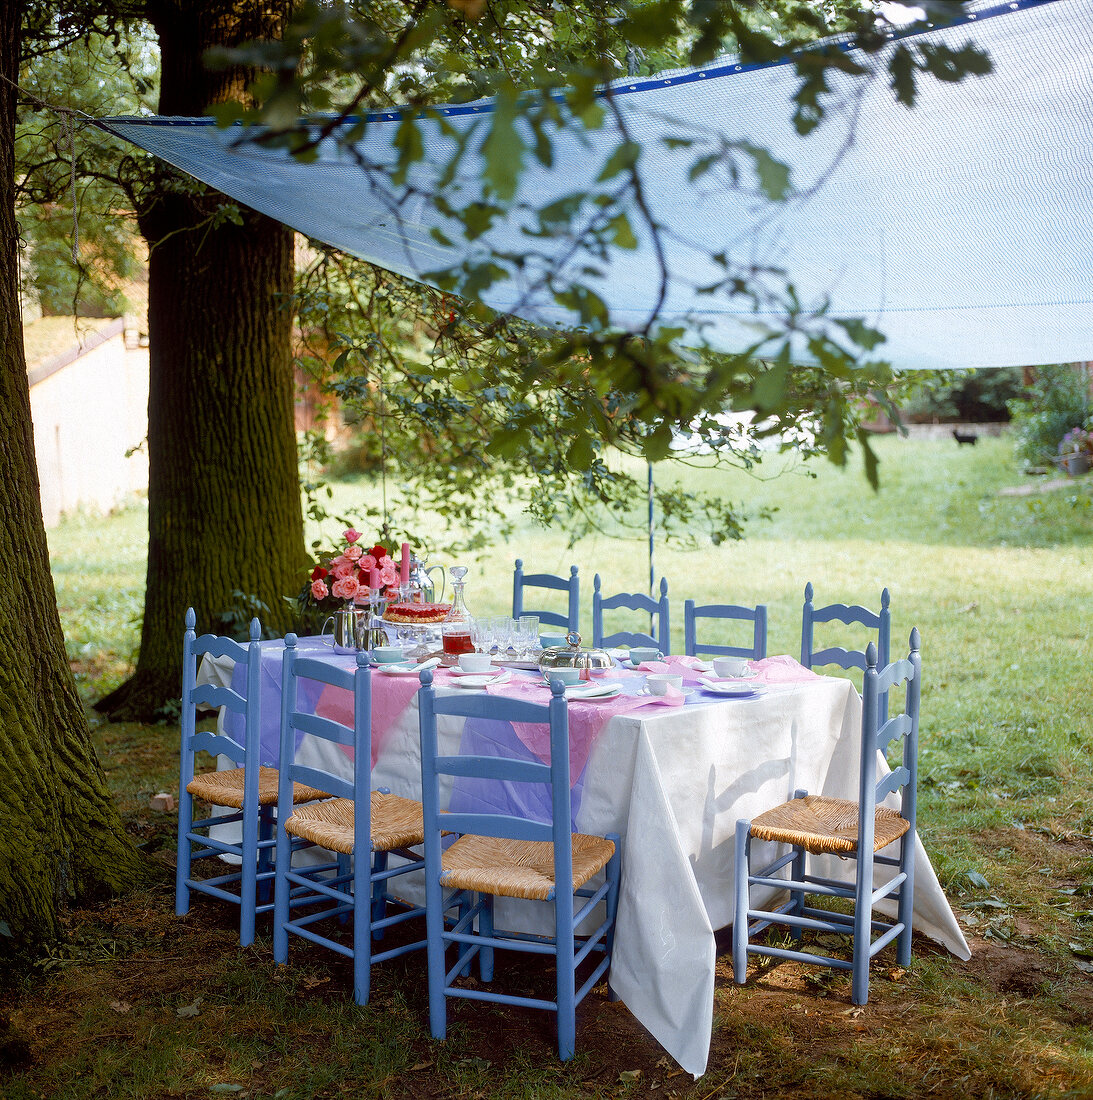 Eight blue chair around table under awning in garden